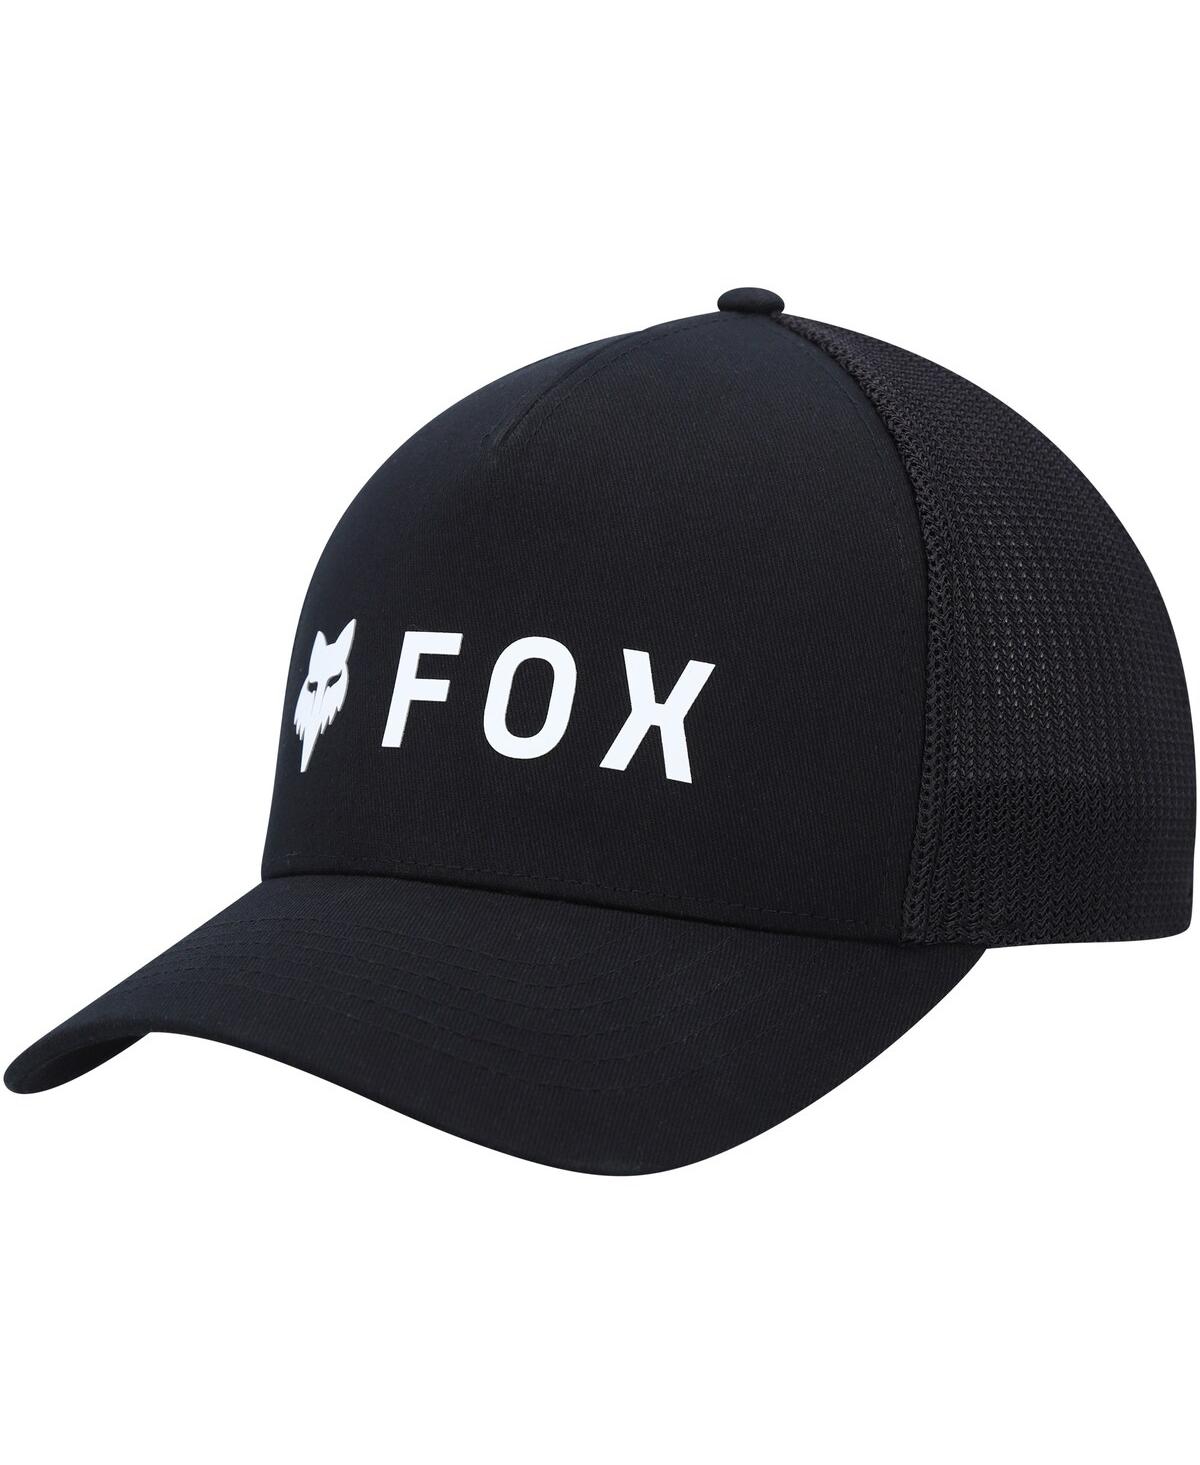 Fox Men's Black Absolute Mesh Flex Hat